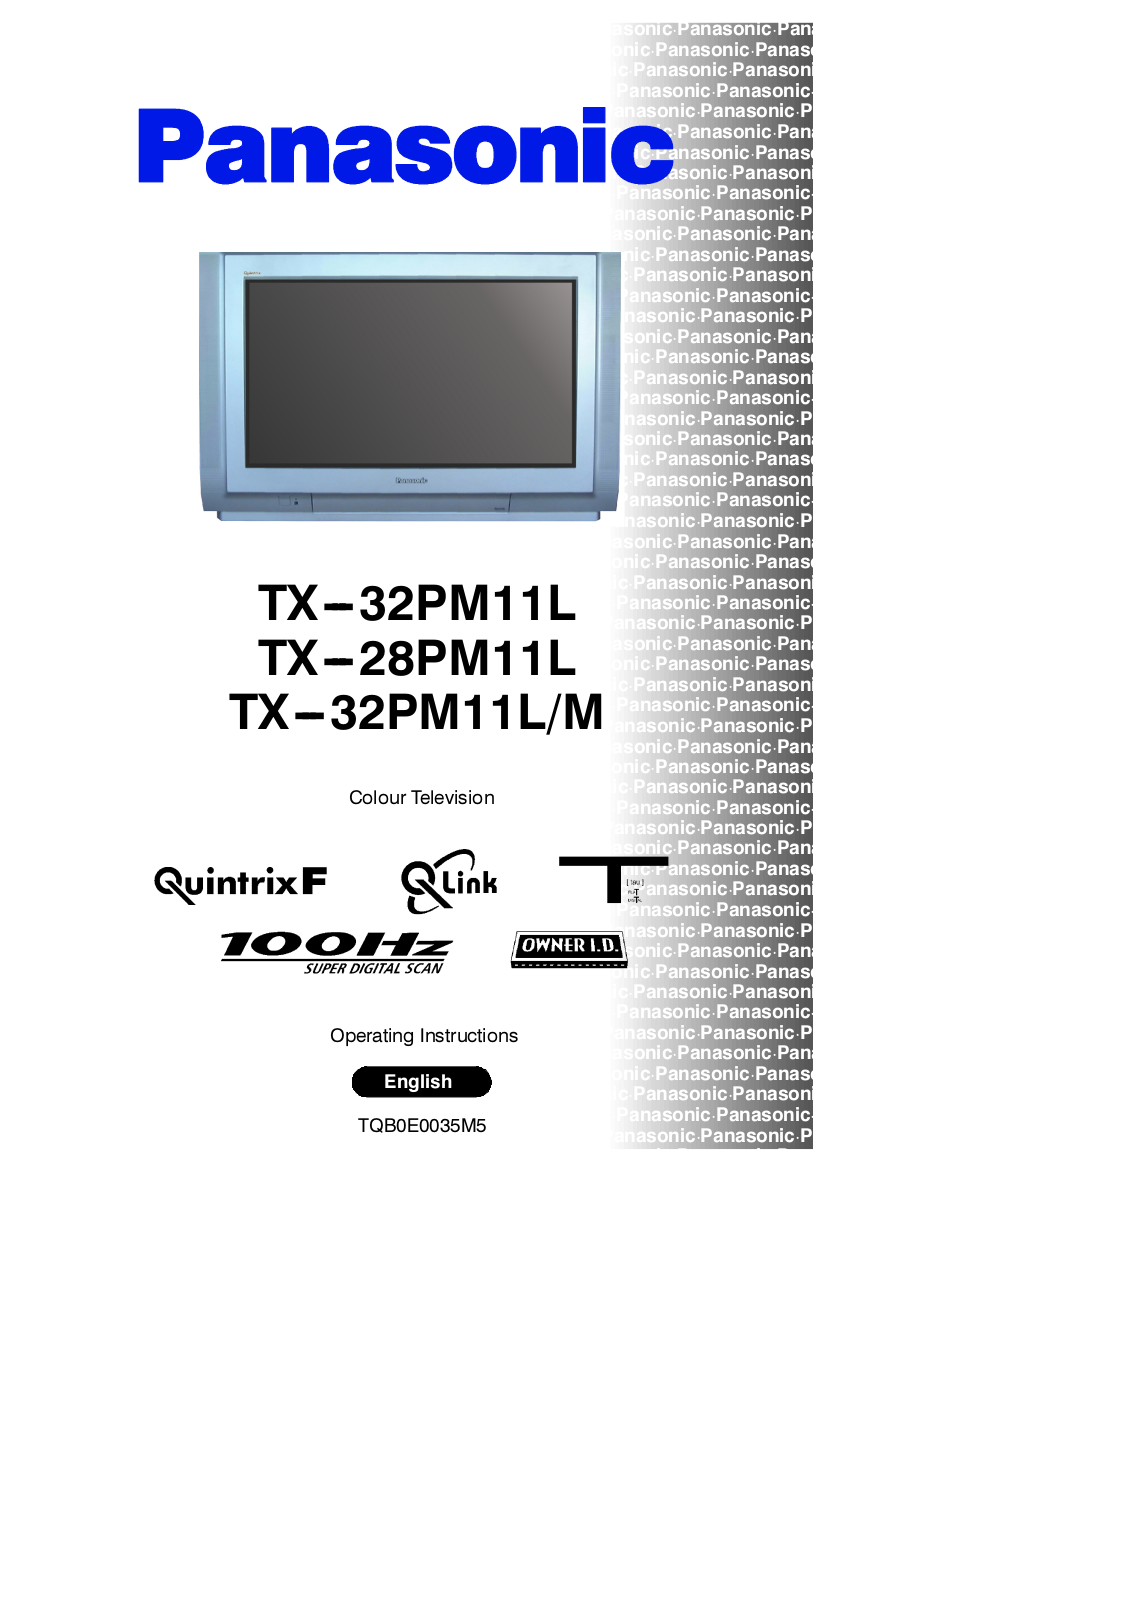 Panasonic TX-28PM11L, TX-32PM11L, TX-32PM11LM User Manual